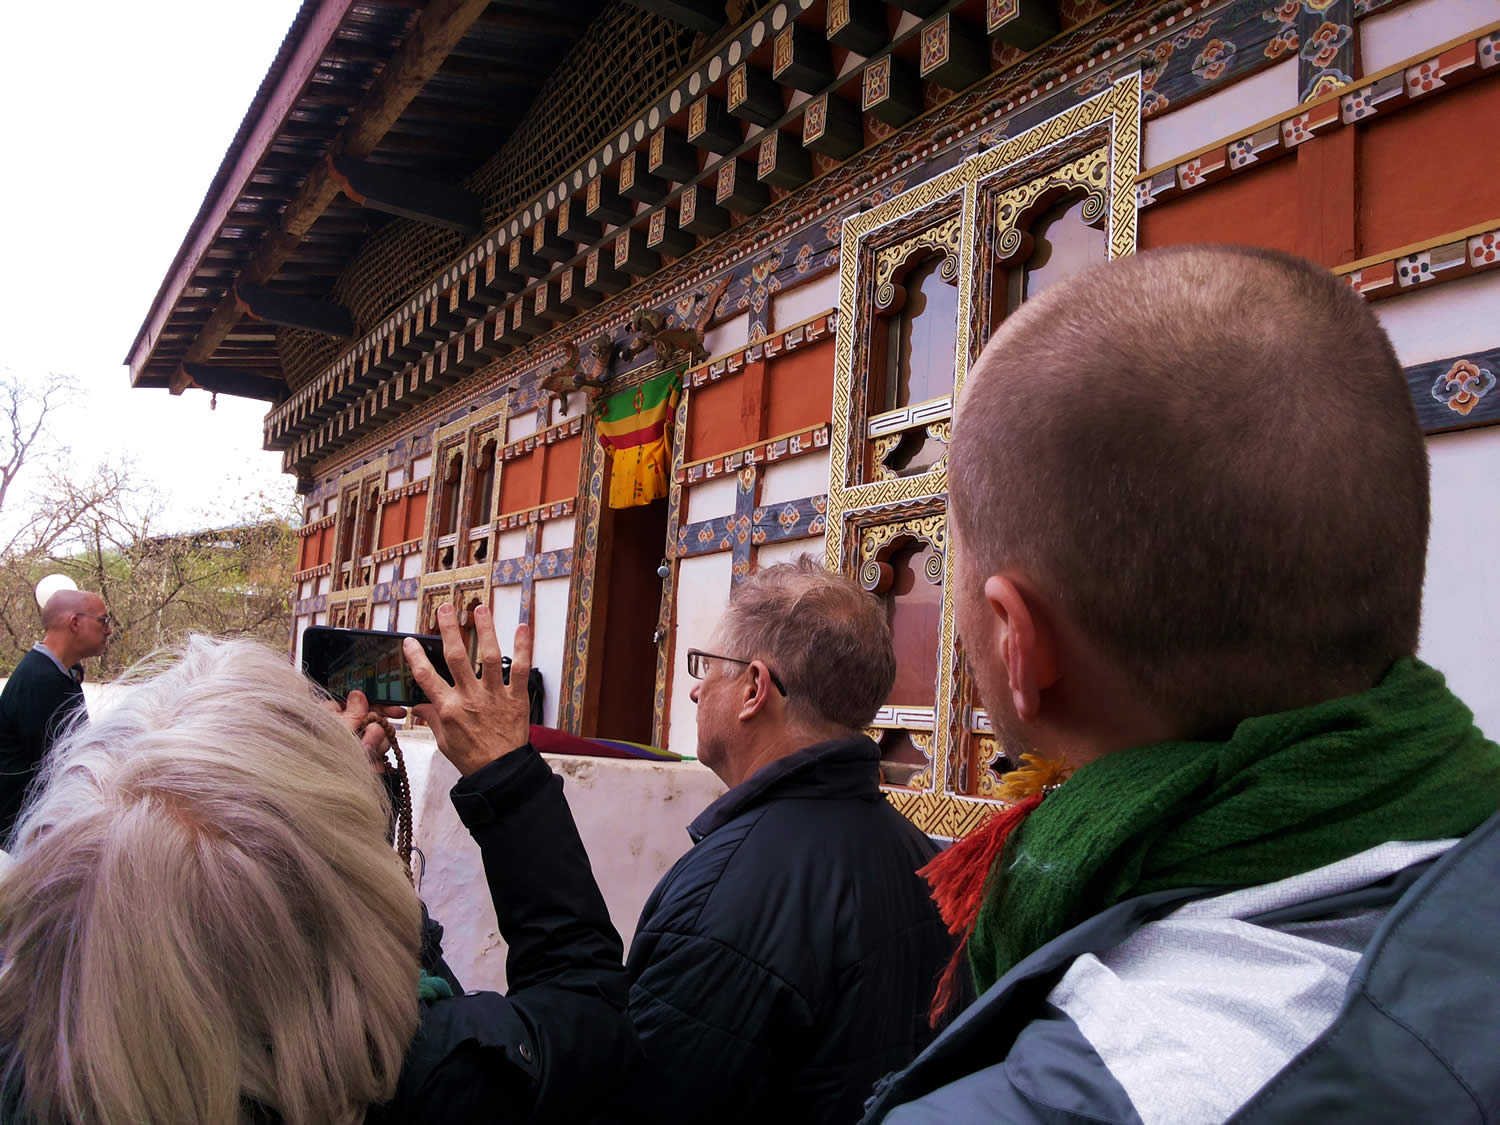 The Dilgo Kyhentse Rinpoche Memorial House now preserved as a museum, Paro, Bhutan.